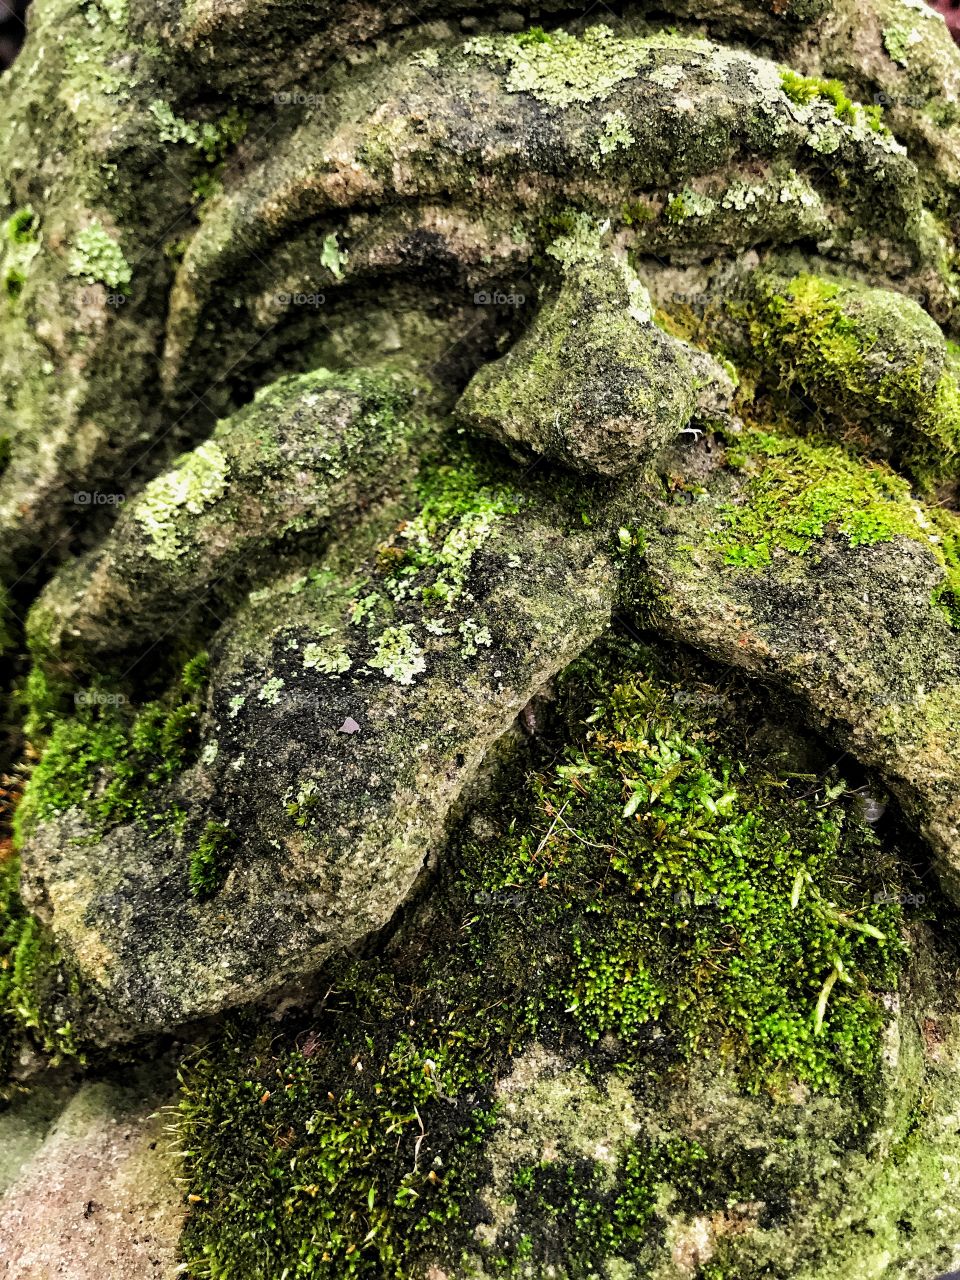 Stone moss man
